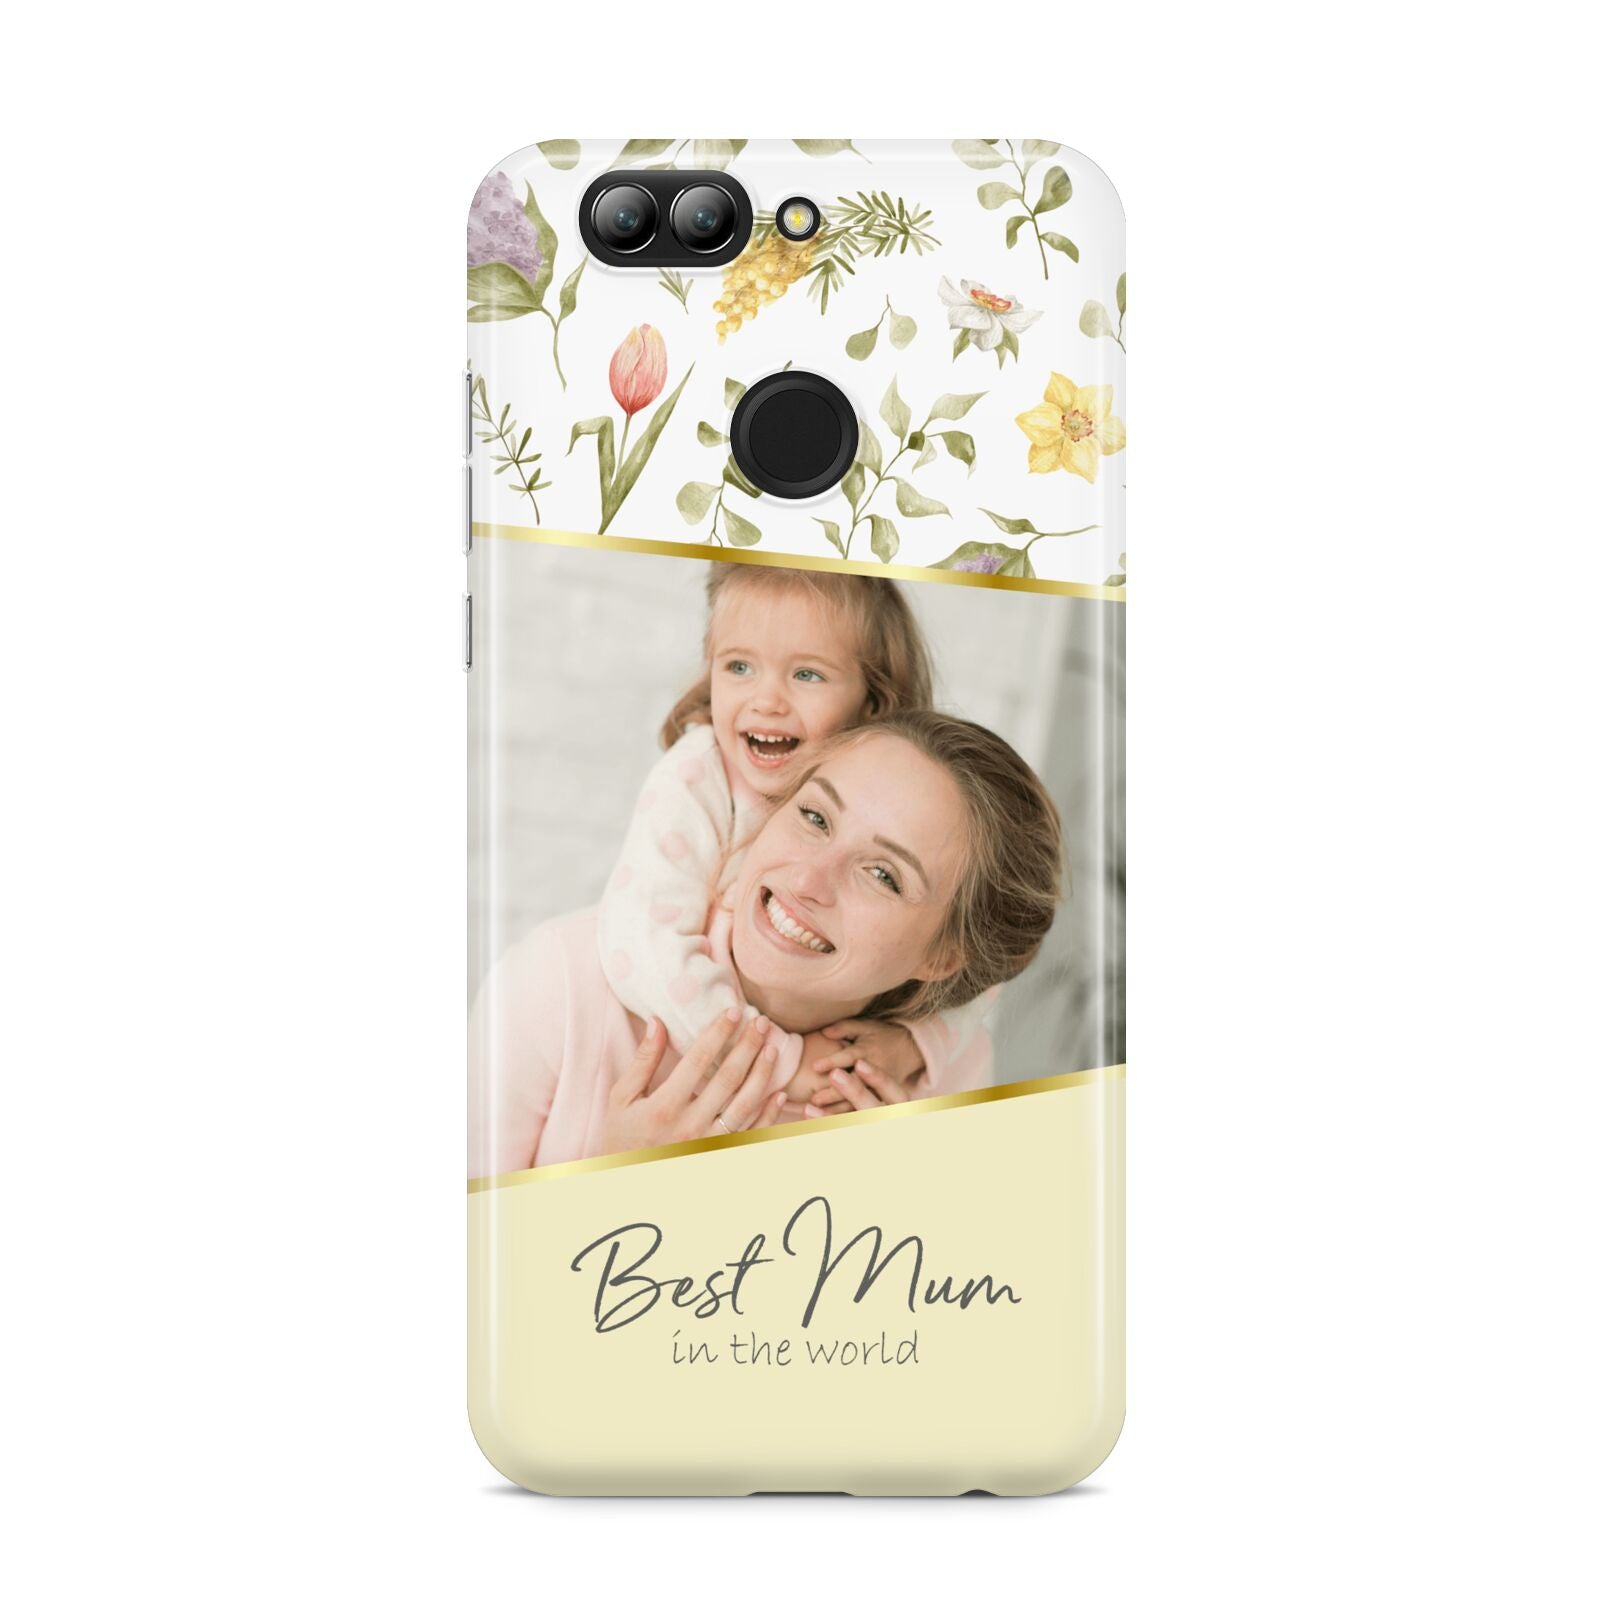 Personalised Best Mum Huawei Nova 2s Phone Case